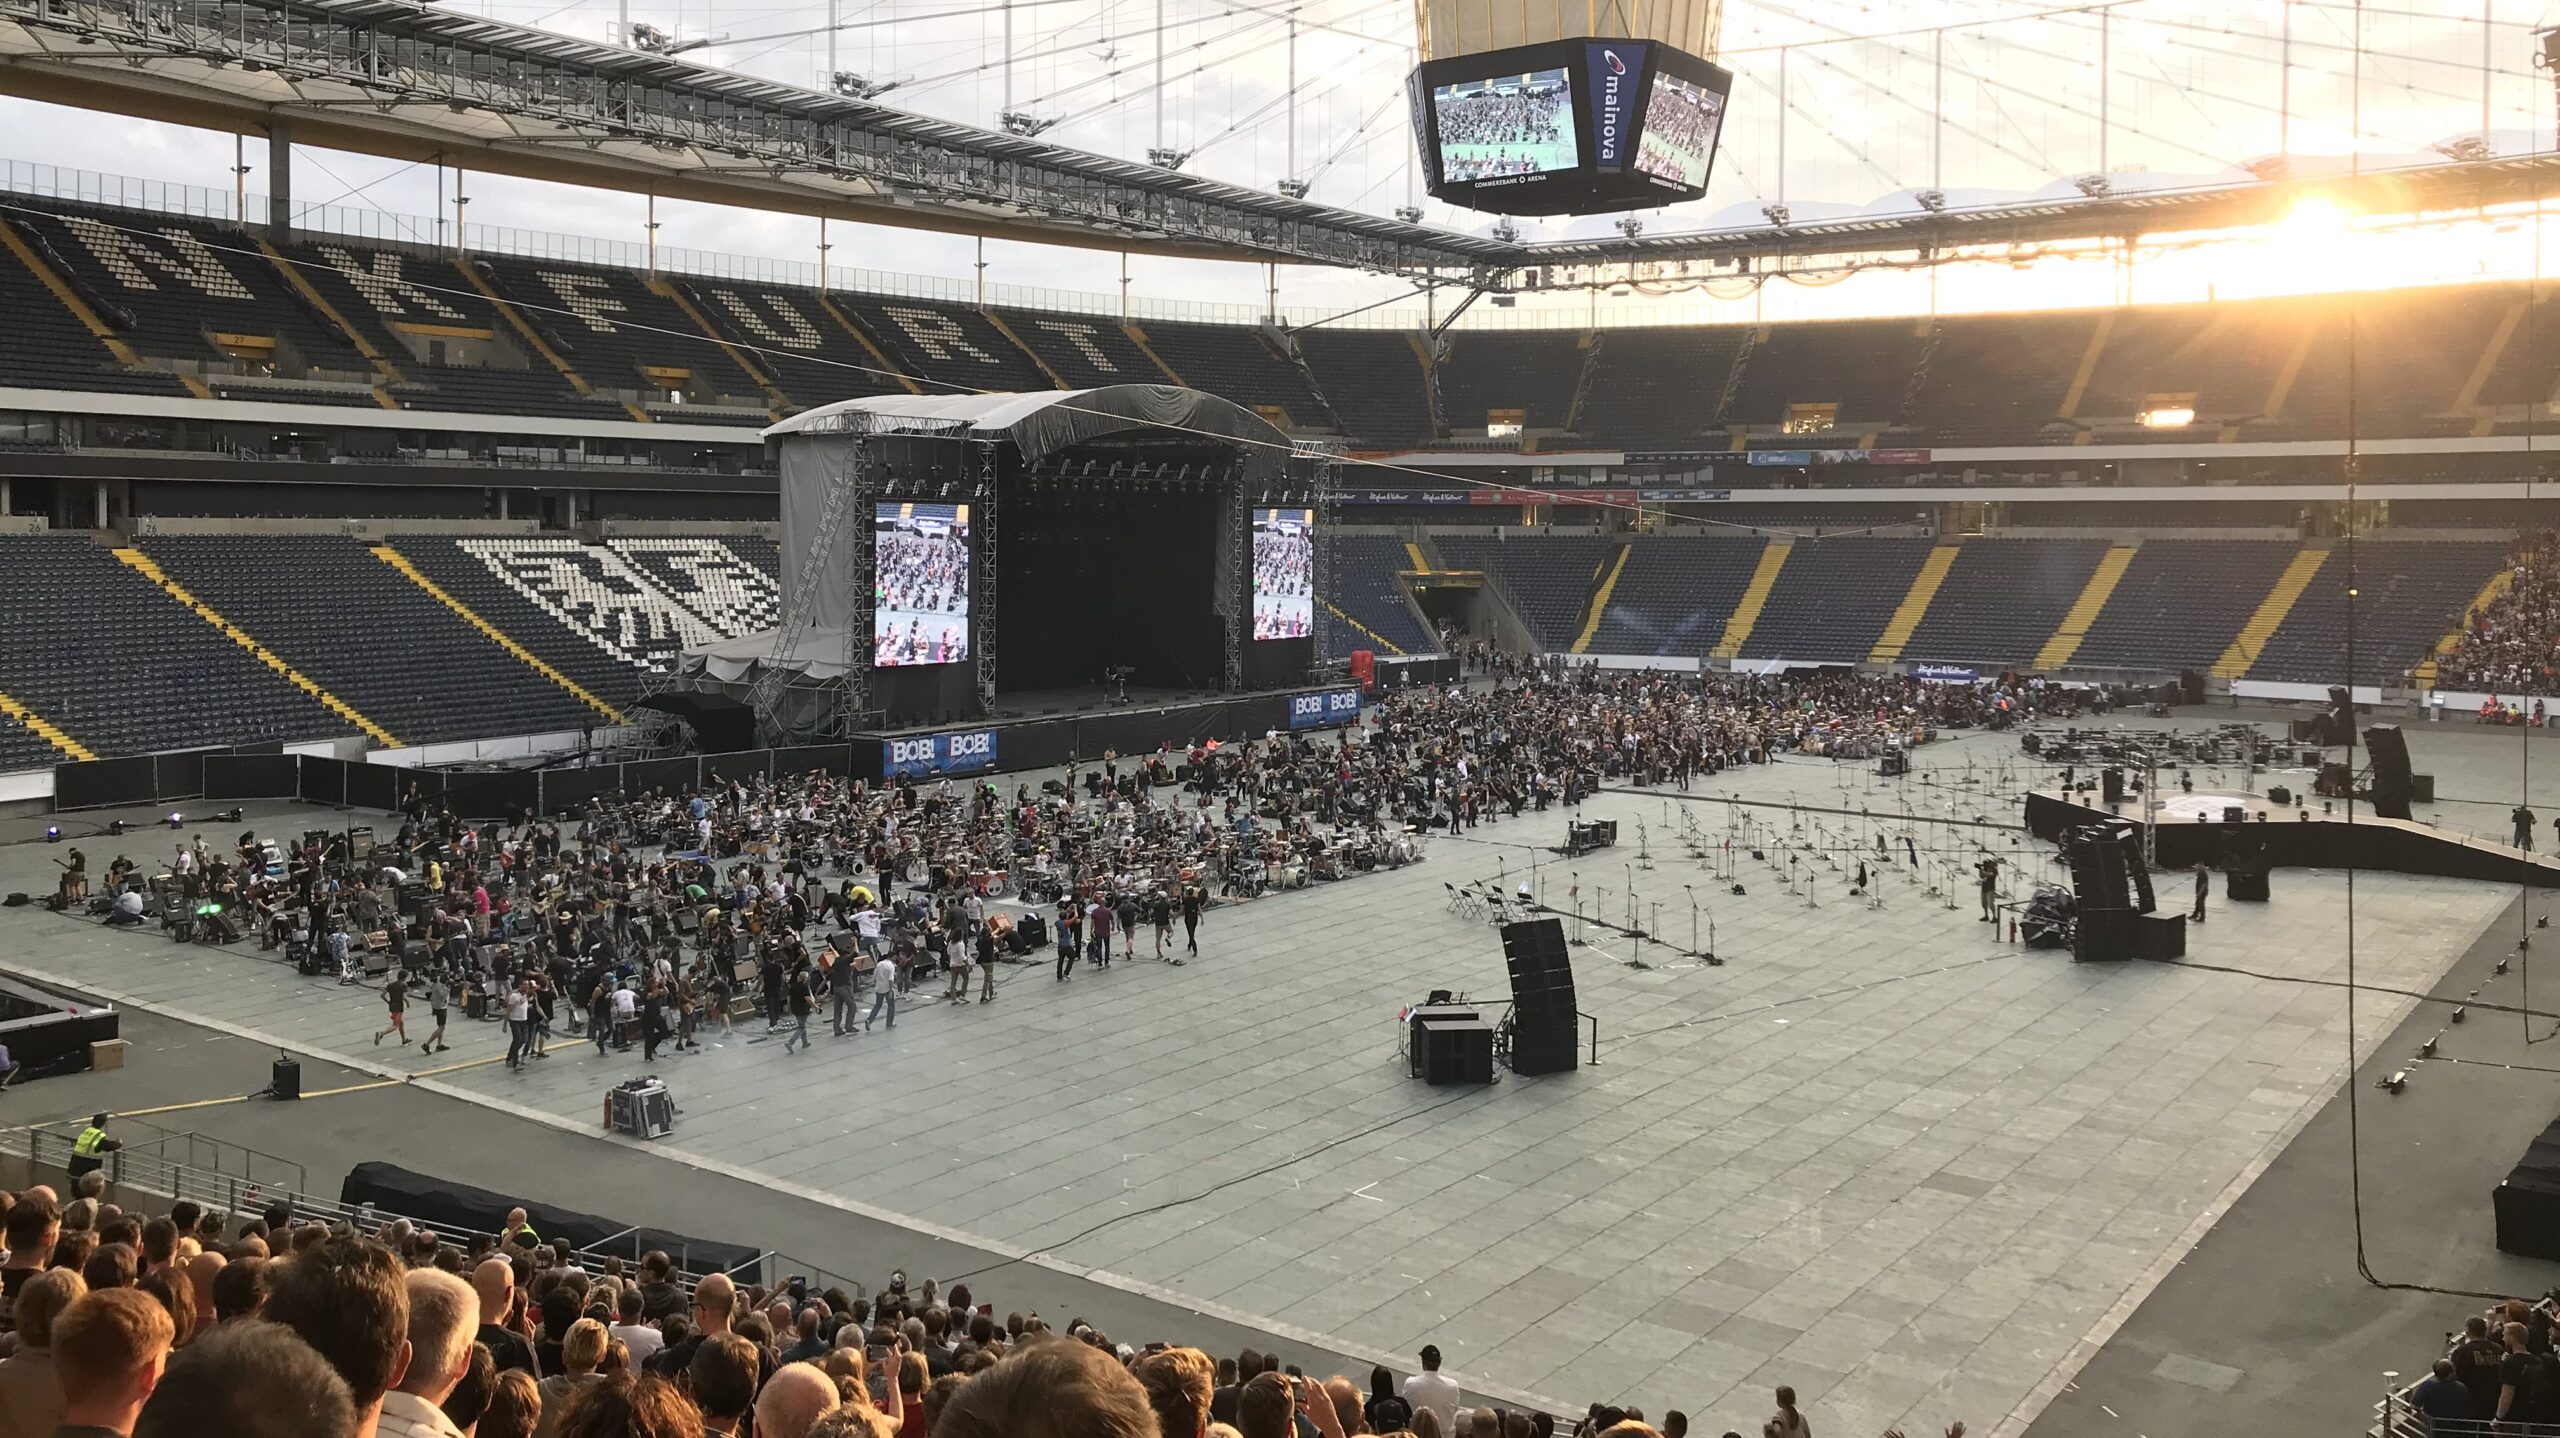 Review: Rockin’1000 in der Commerzbank Arena Frankfurt